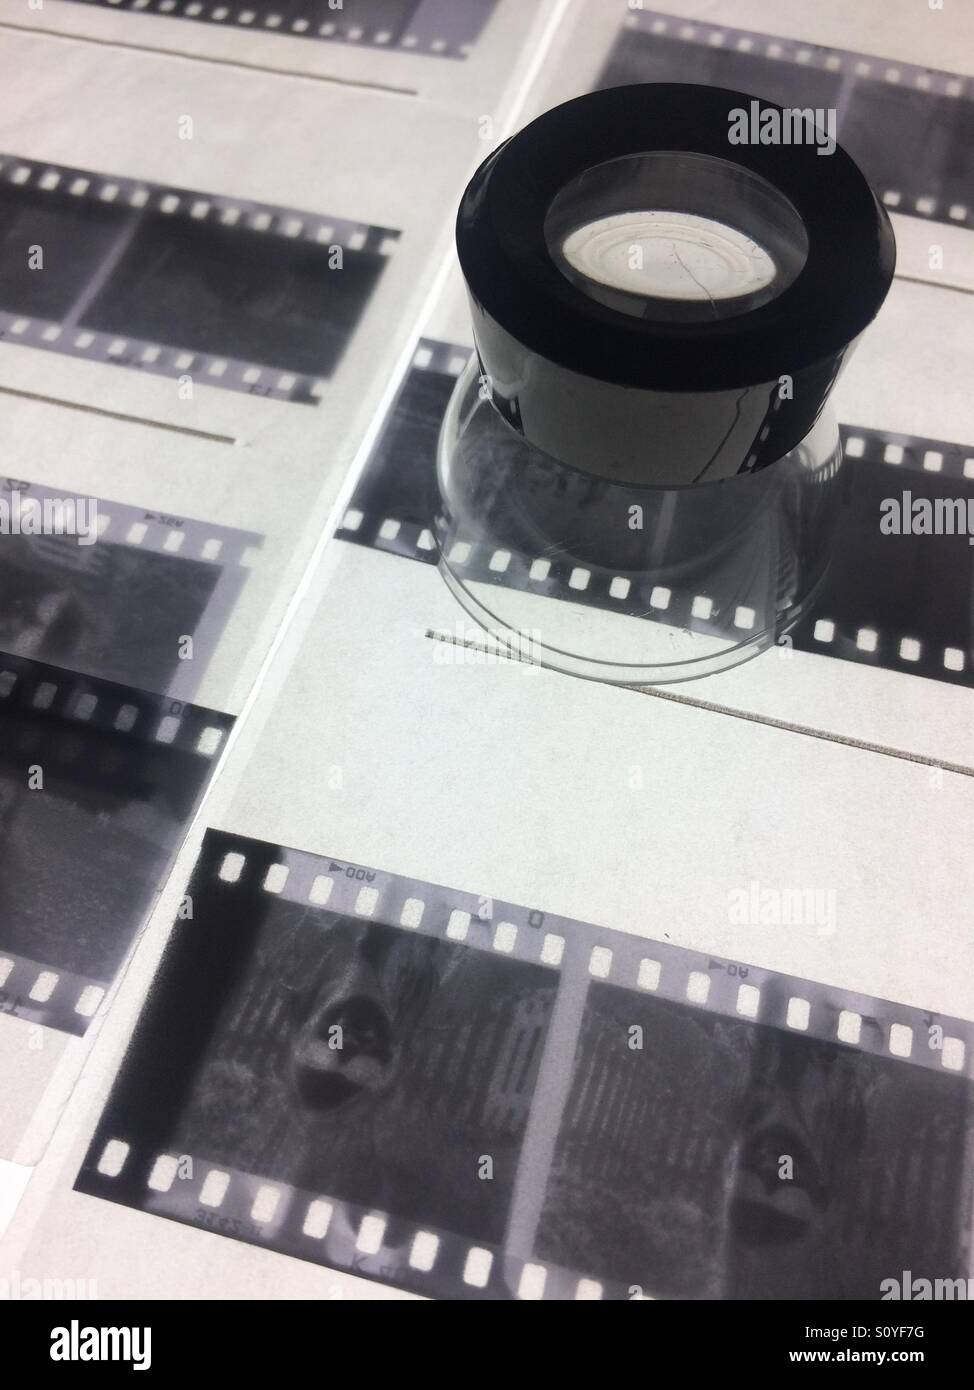 Fuji Fujifilm Professional 4x Loupe Magnifier -Clean